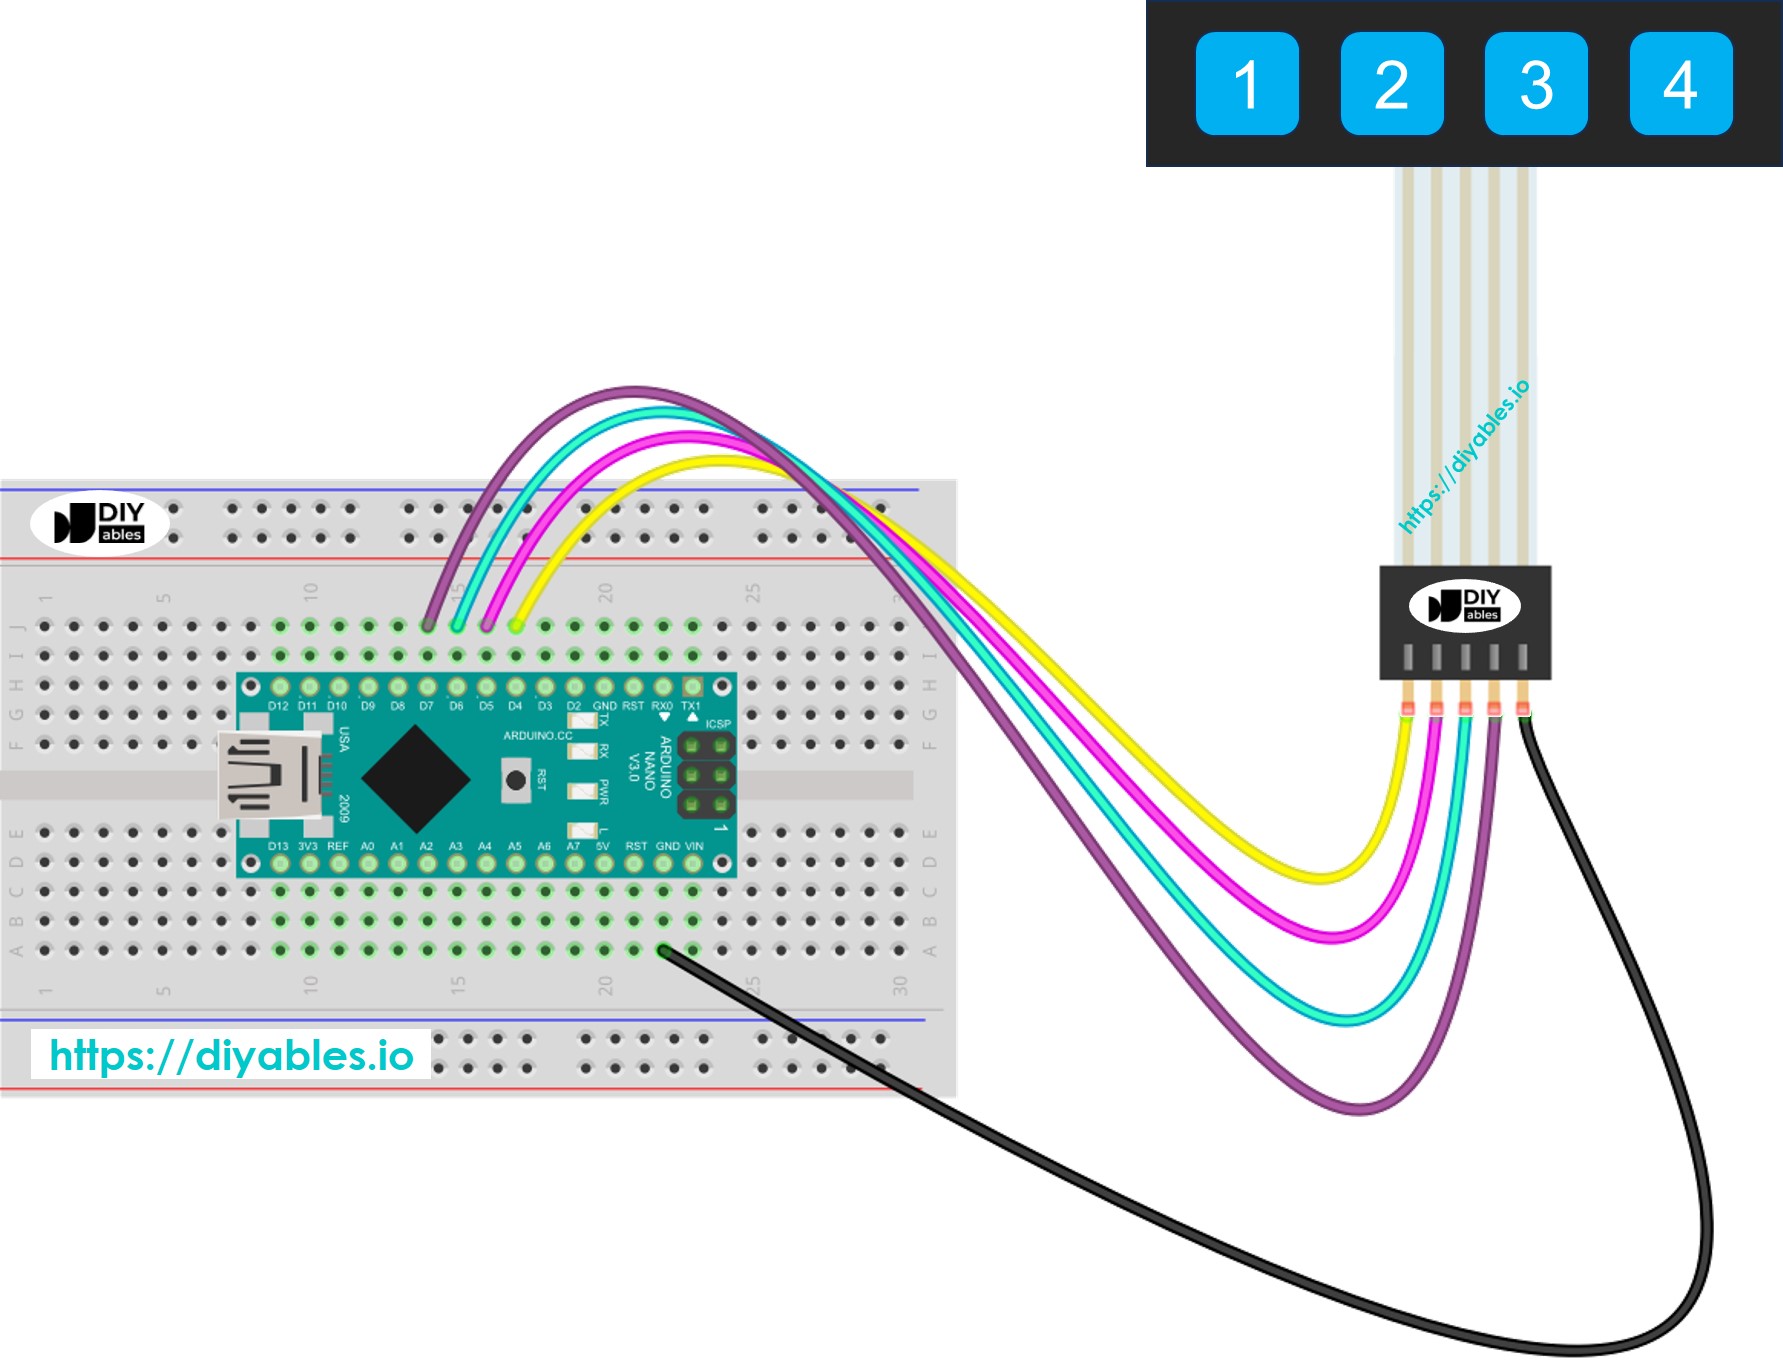 The wiring diagram between Arduino Nano and Keypad 1x4